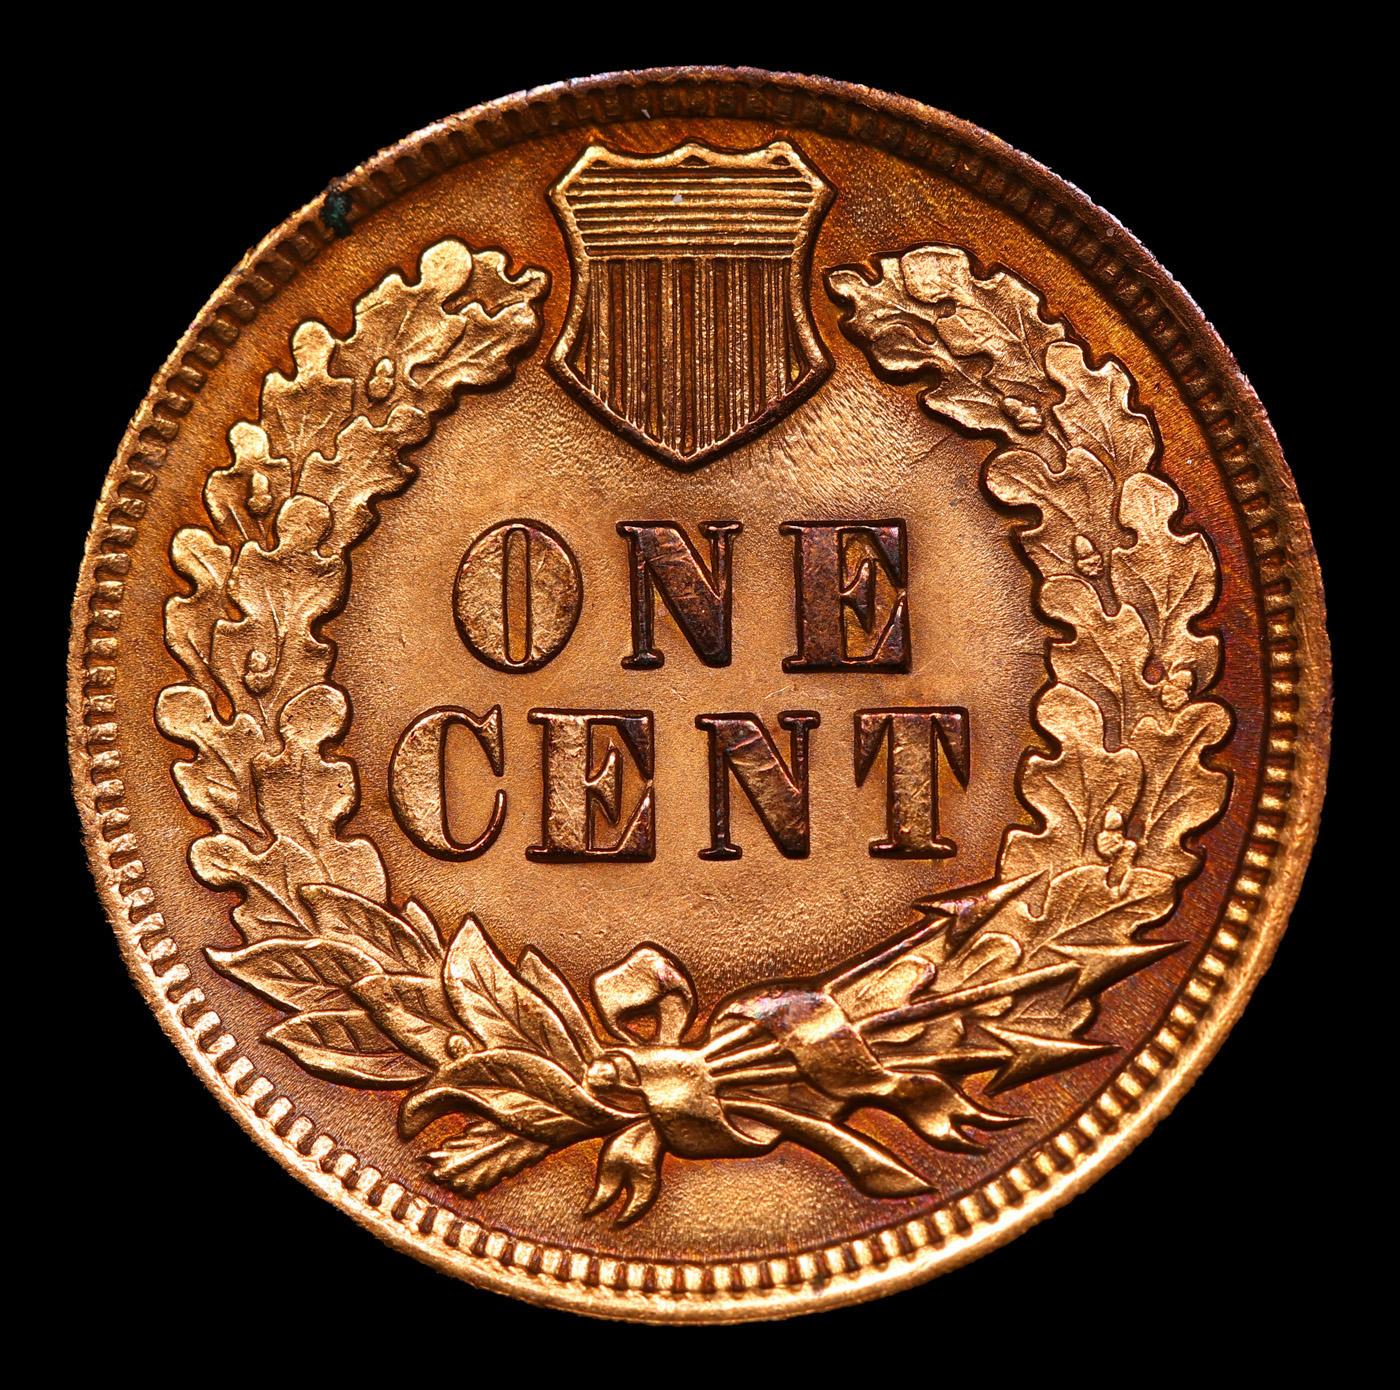 1901 Indian Cent 1c Grades Choice Unc RD